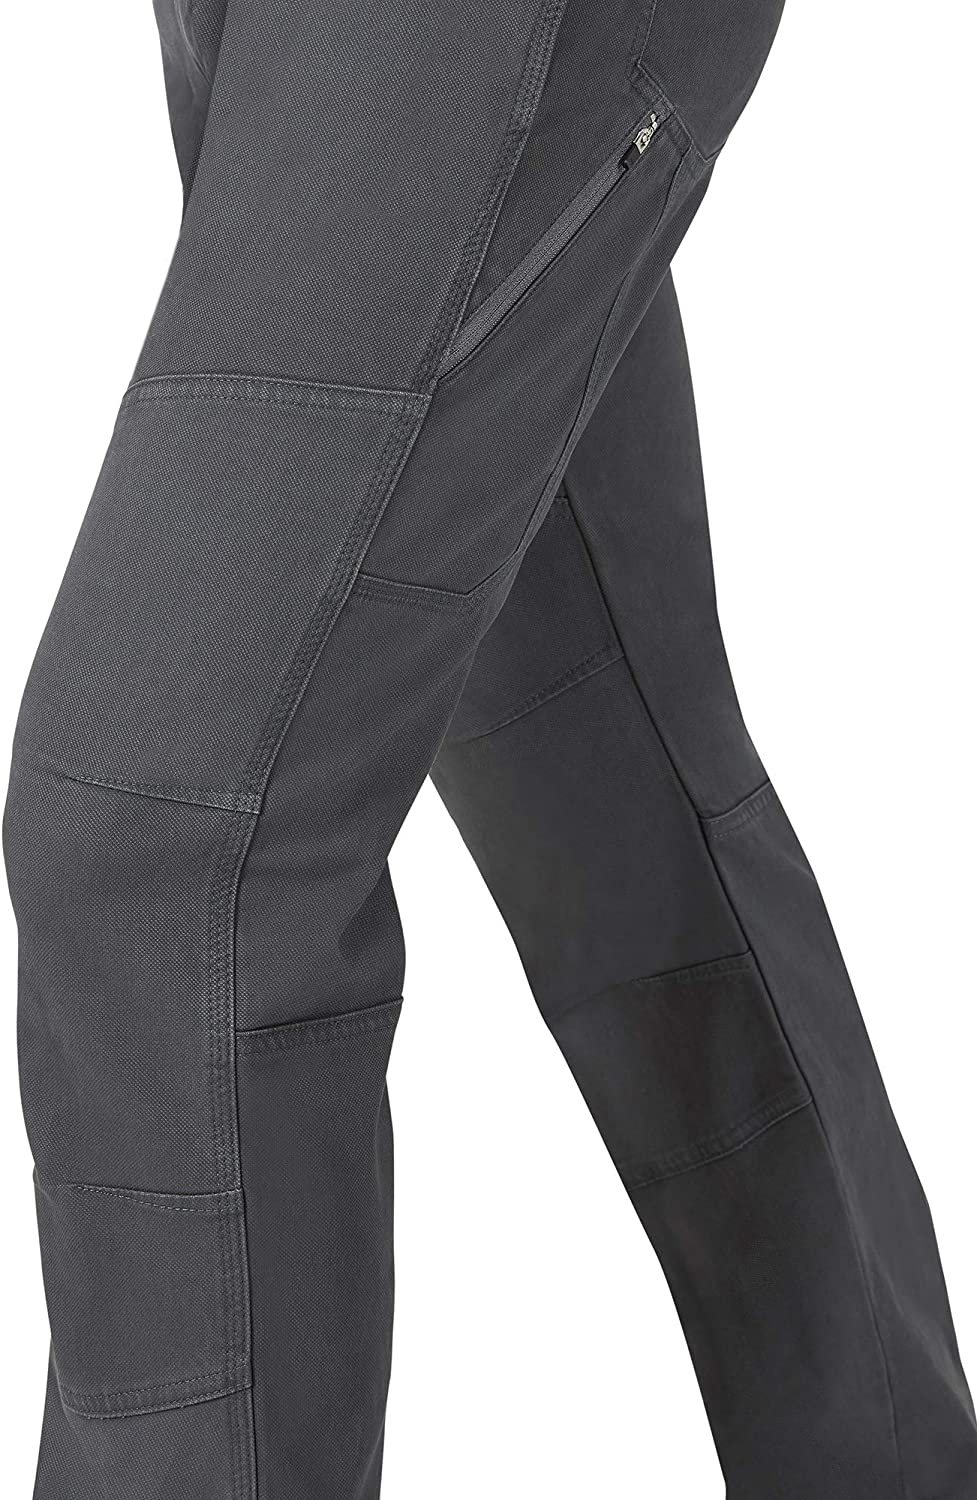 ATG by Wrangler Men's Reinforced Utility Pant, Gray, Size 36W x 32L ...